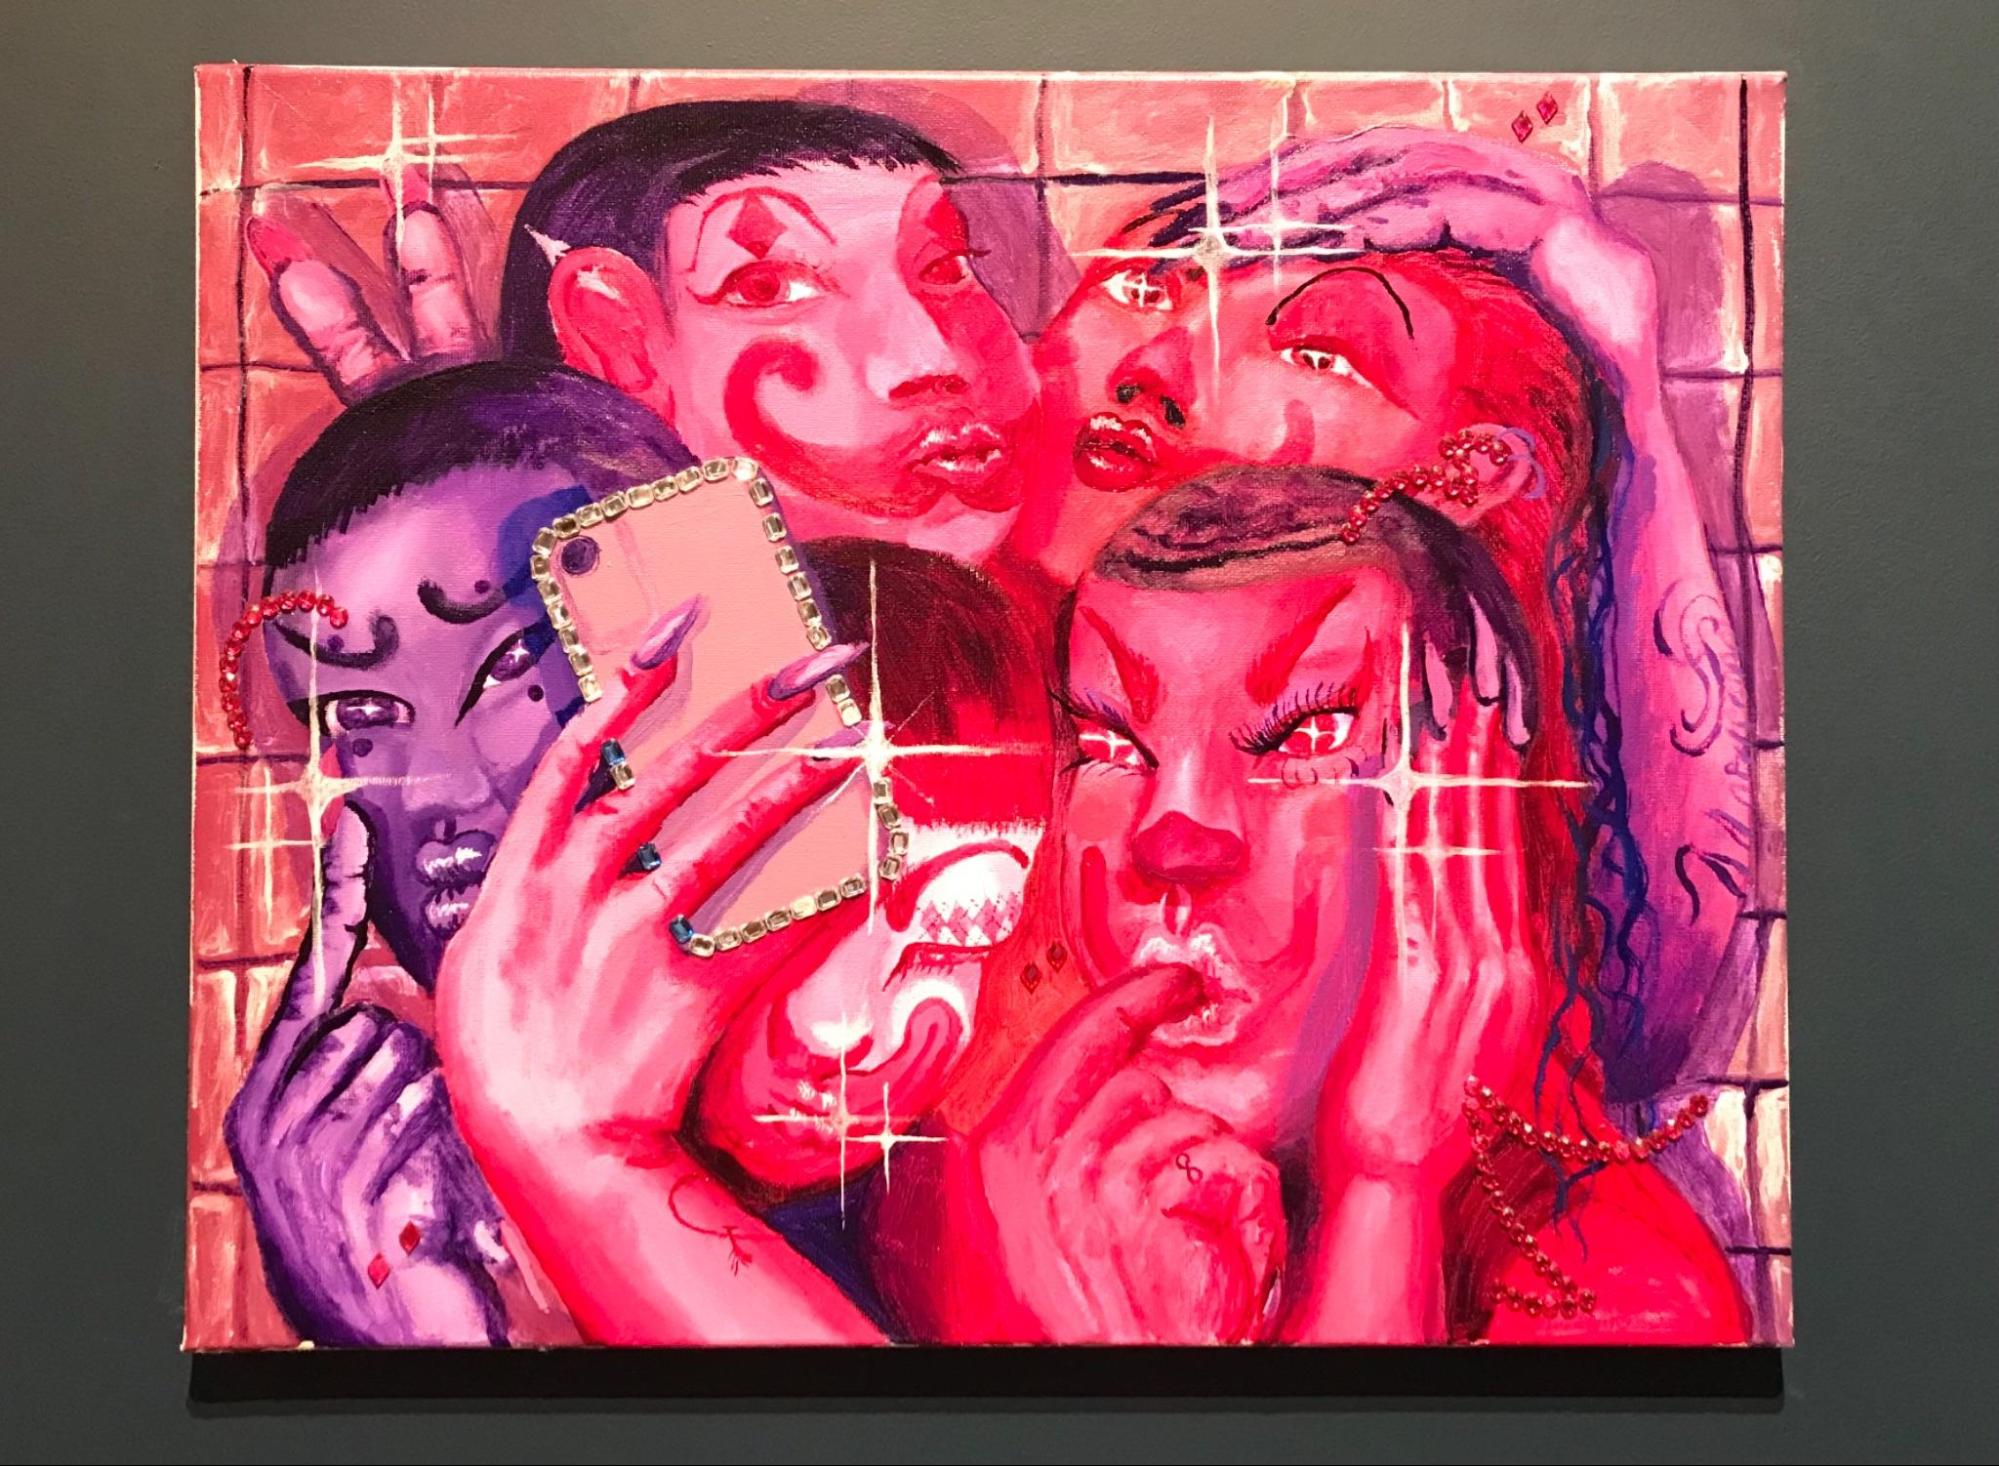 Bathroom Selfie, 2020, acrylic and rhinestones on canvas, 20” x 16”